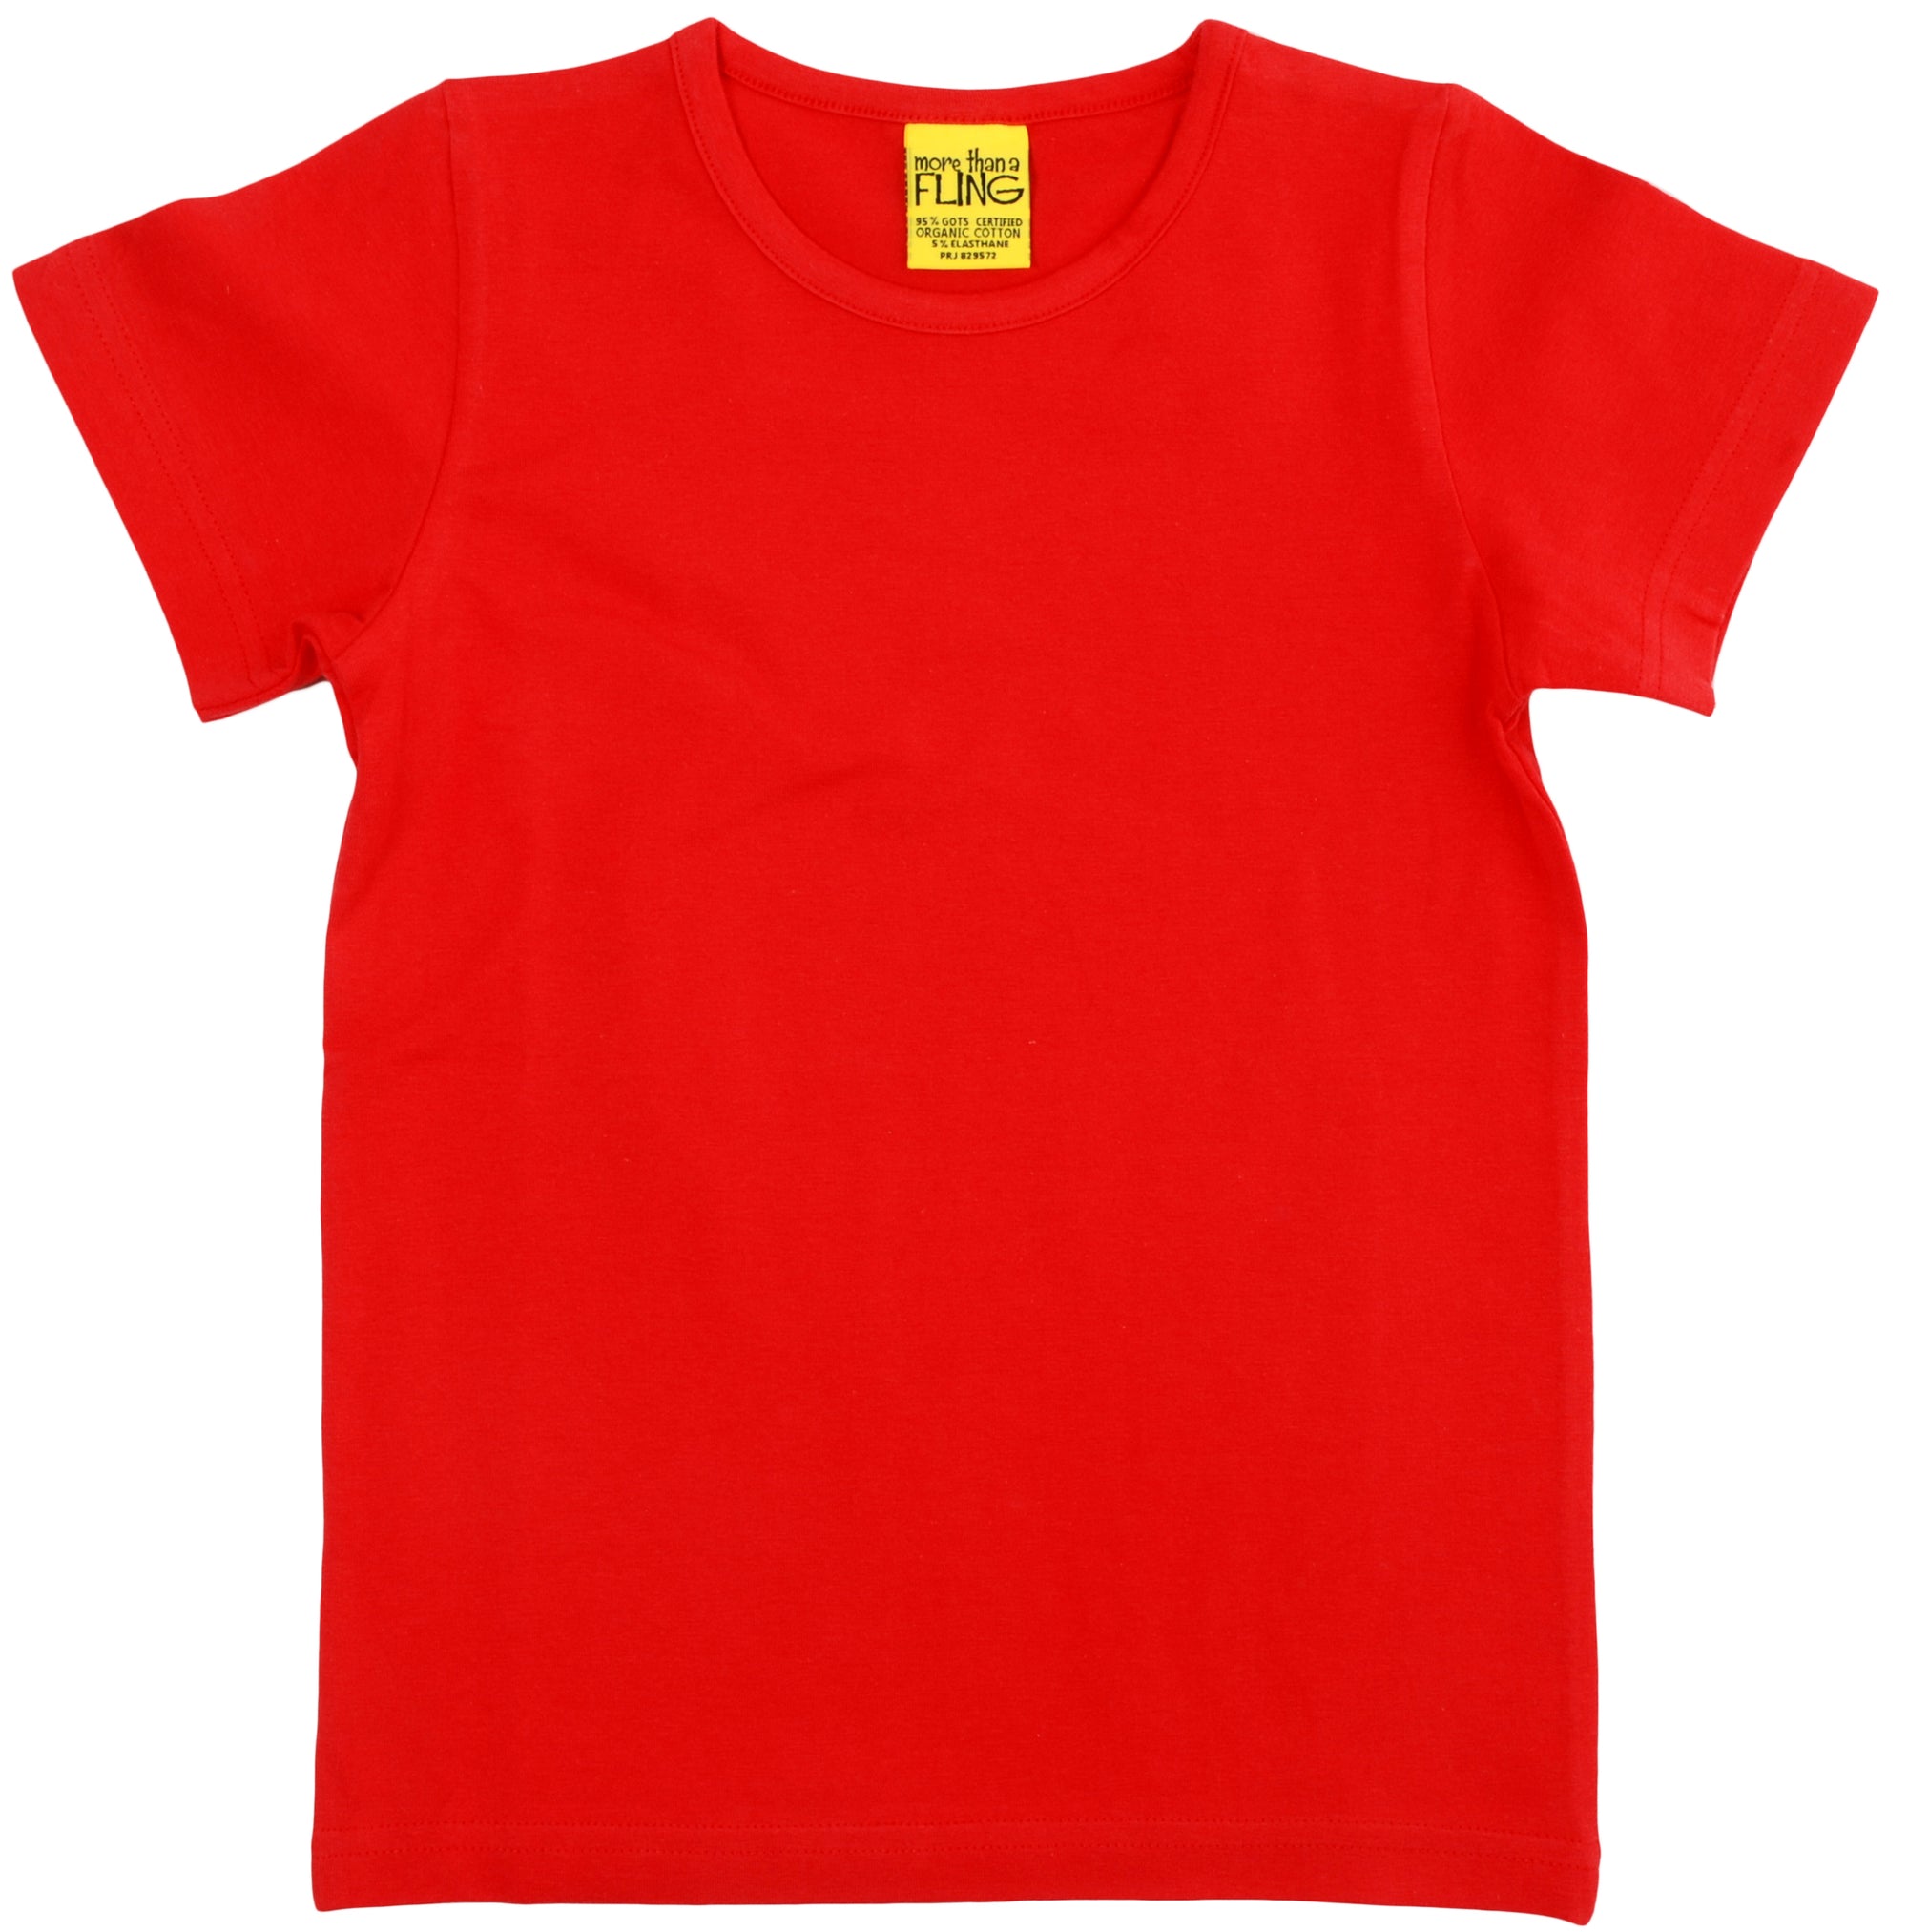 More Than A Fling T Shirt Red - Rood Shirt